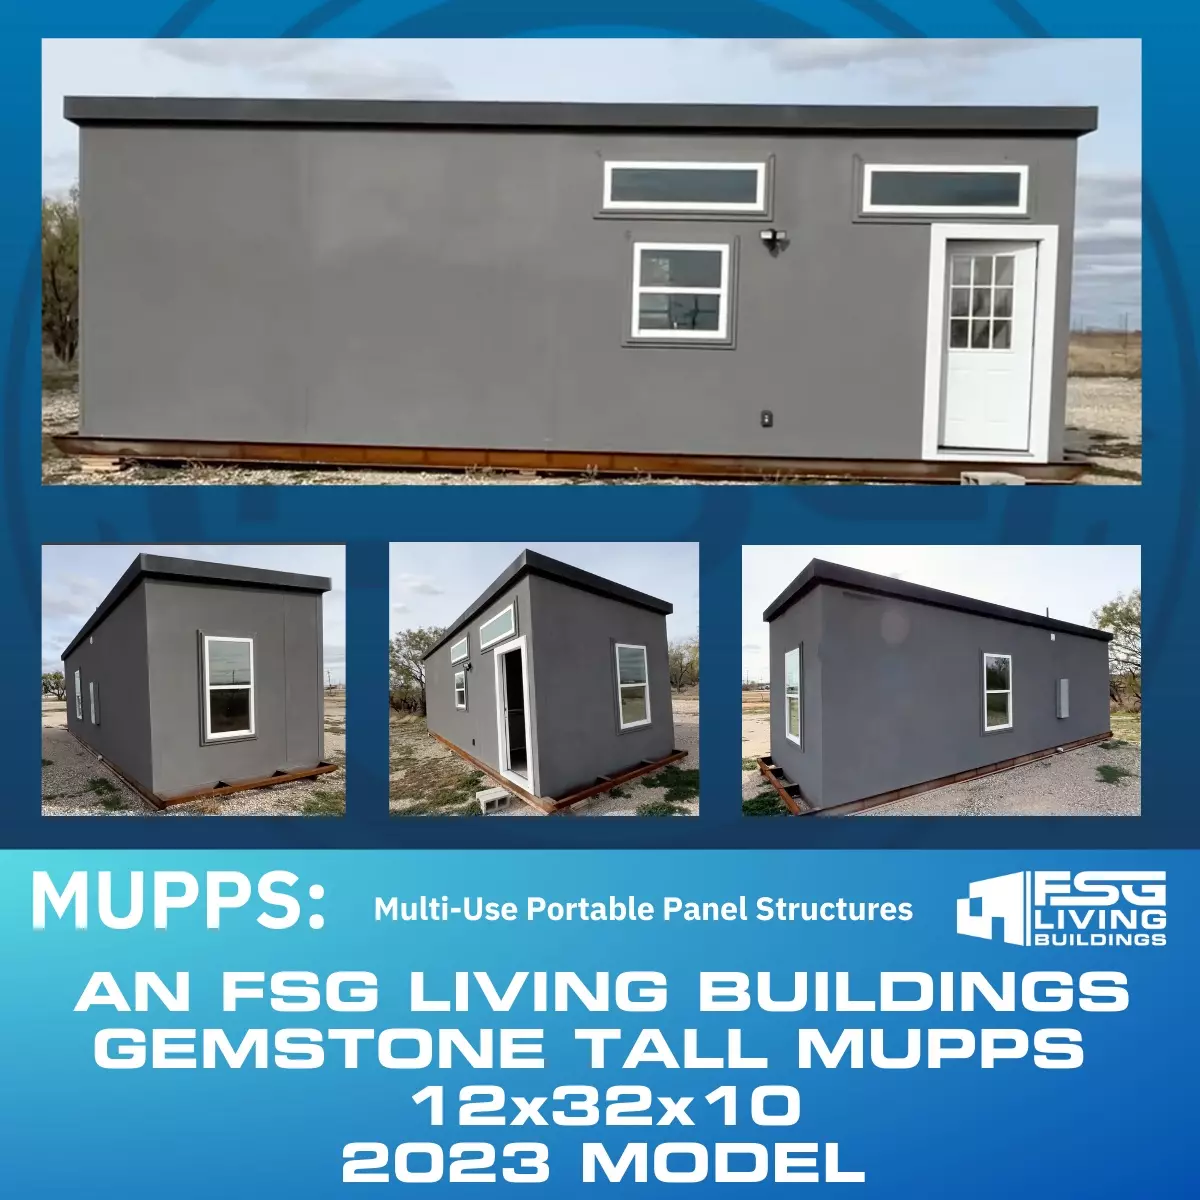 Gemstone tall mupps tiny homes